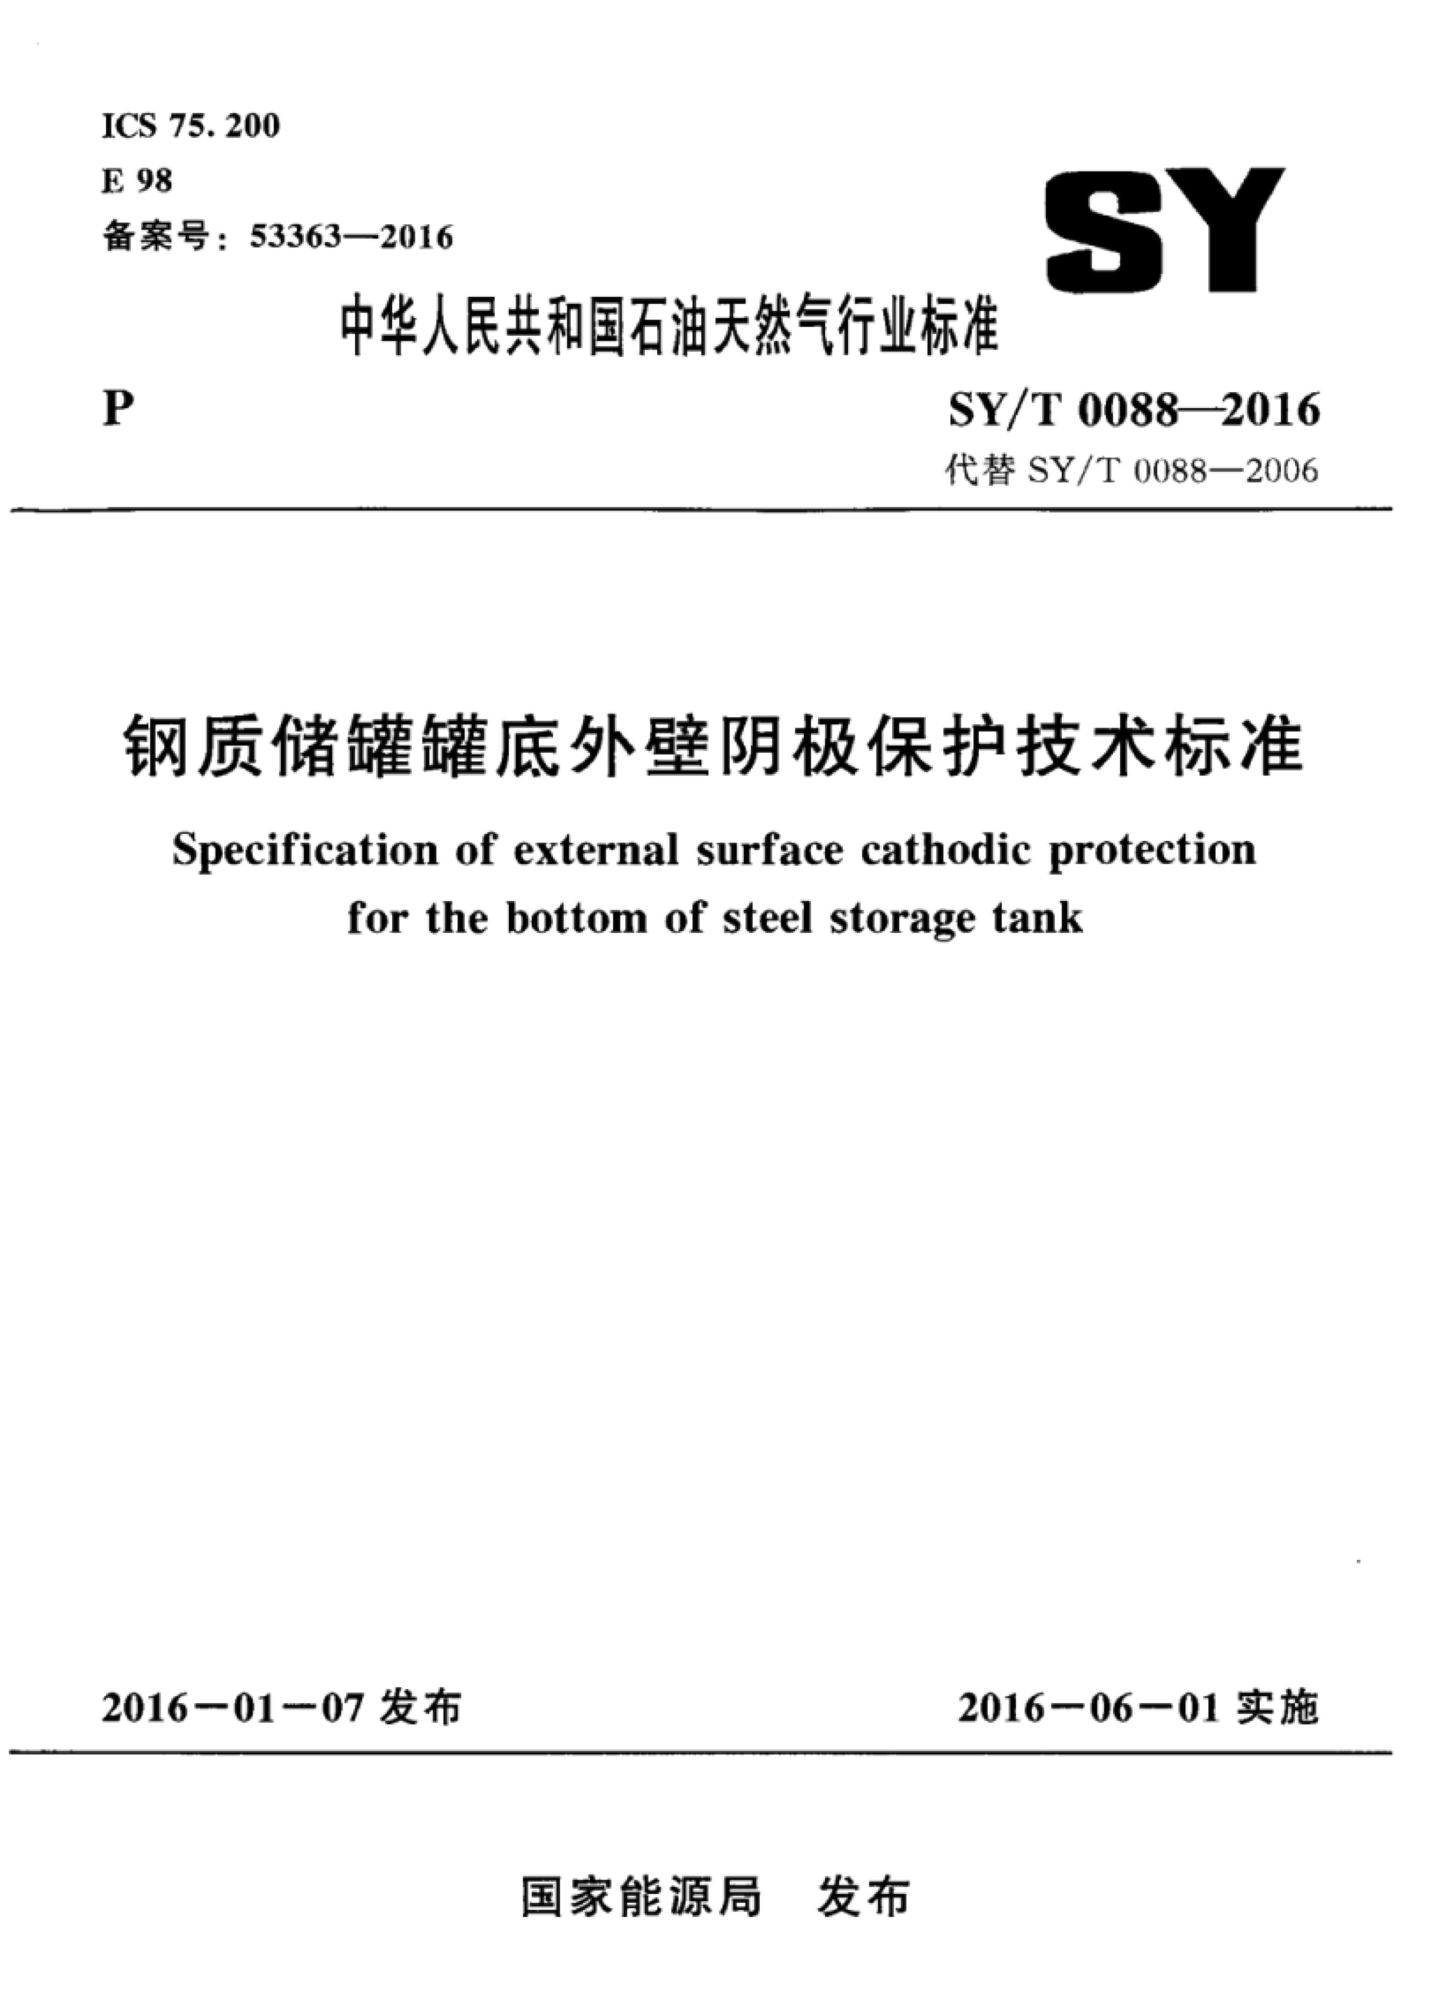 SYT 0088-2016 钢质储罐罐底外壁阴极保护技术标准-1_看图王.jpg